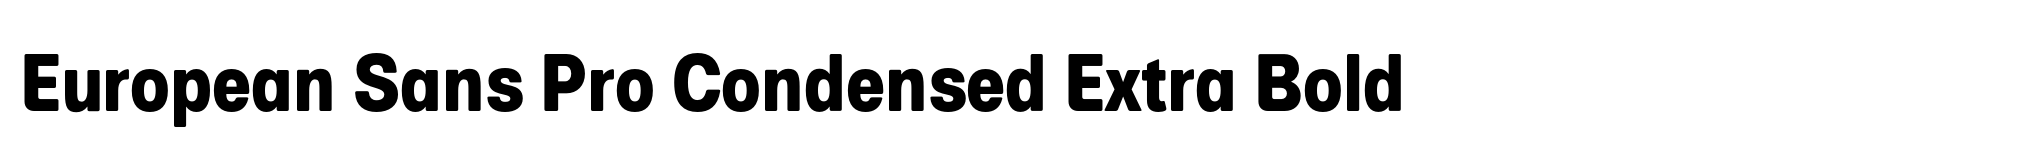 European Sans Pro Condensed Extra Bold image